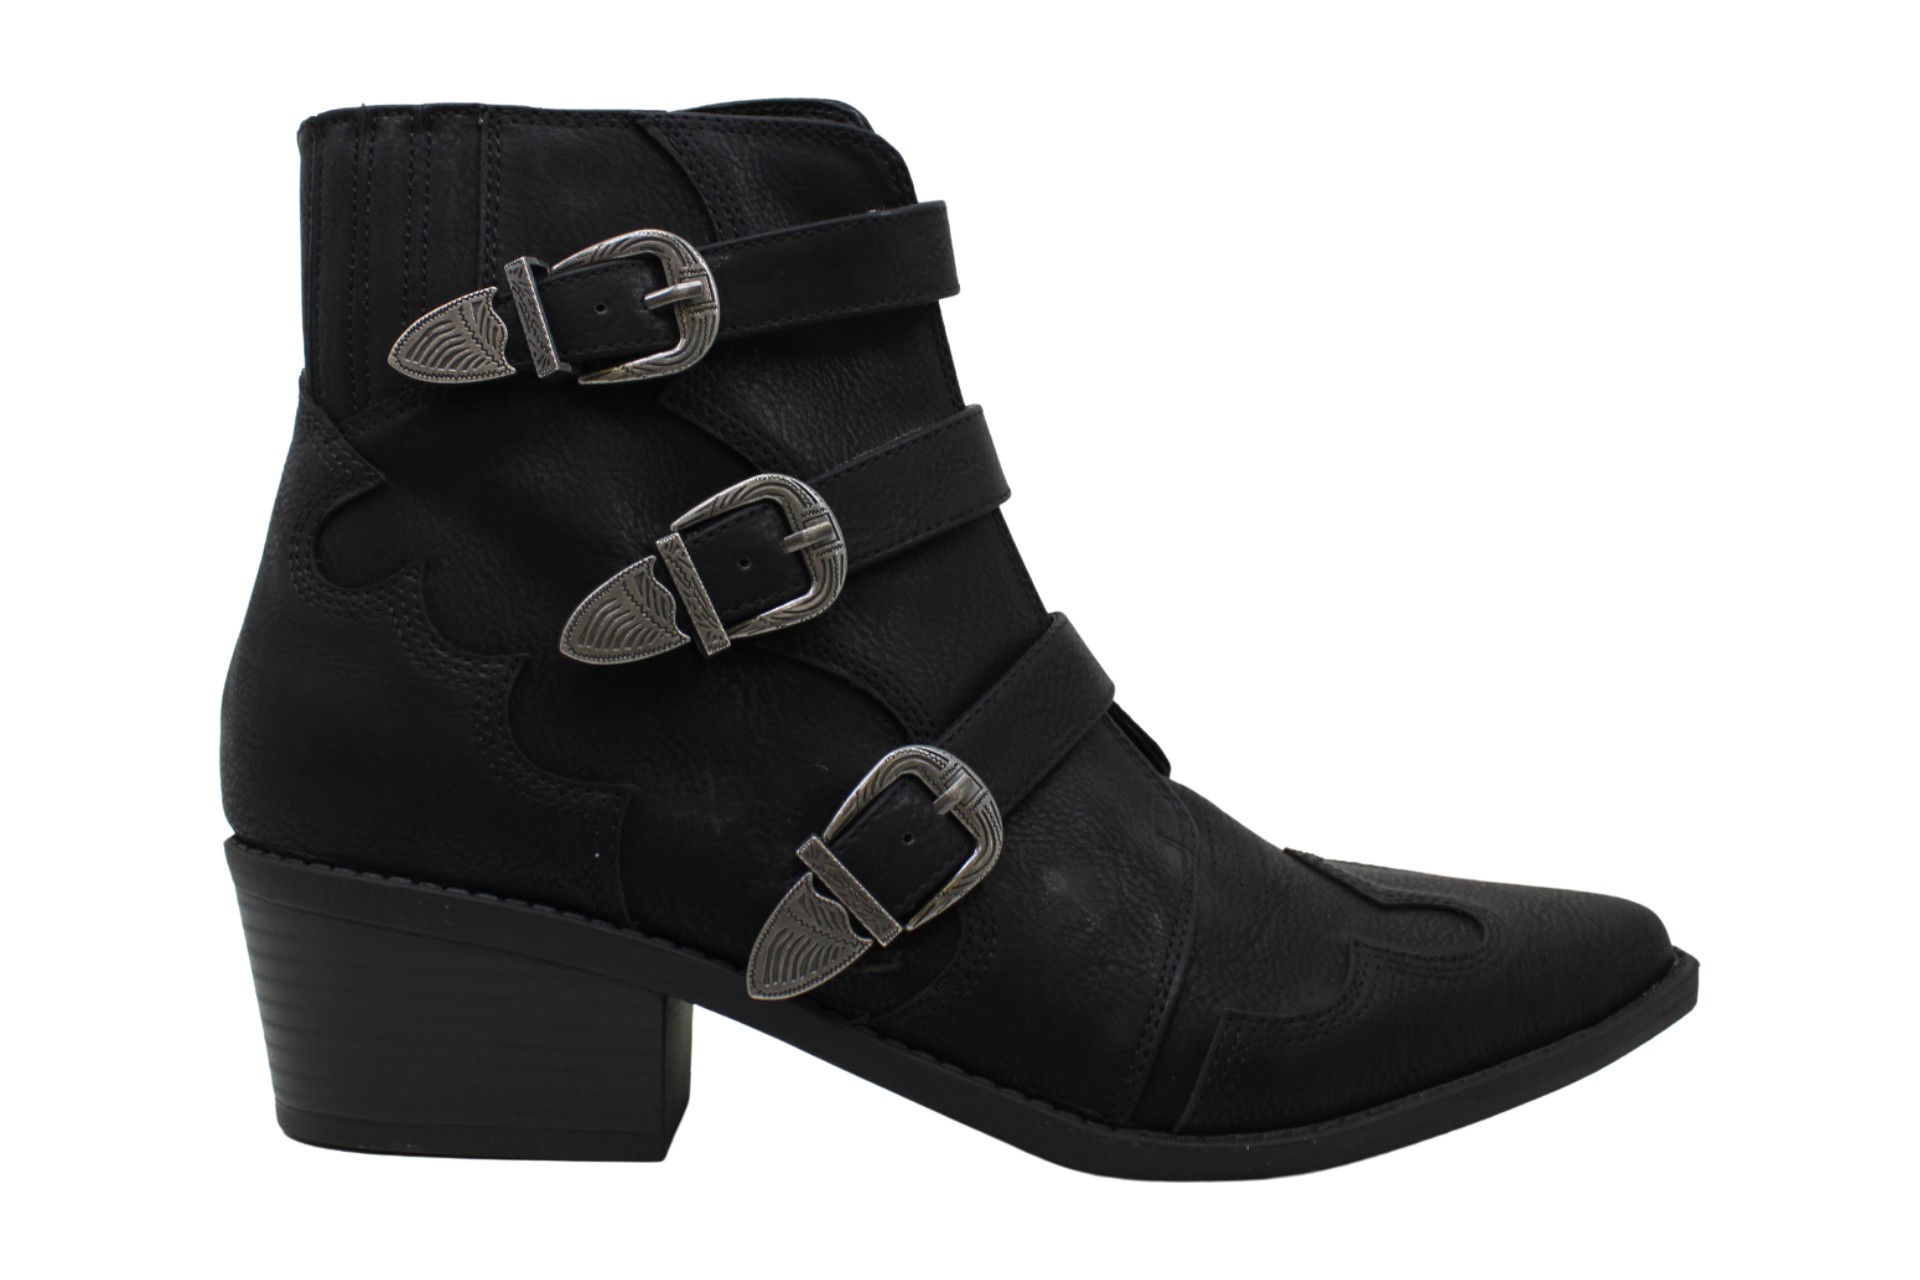 Indigo Rd. Womens Yasmina Boots, Black, Size 7.5 eBay